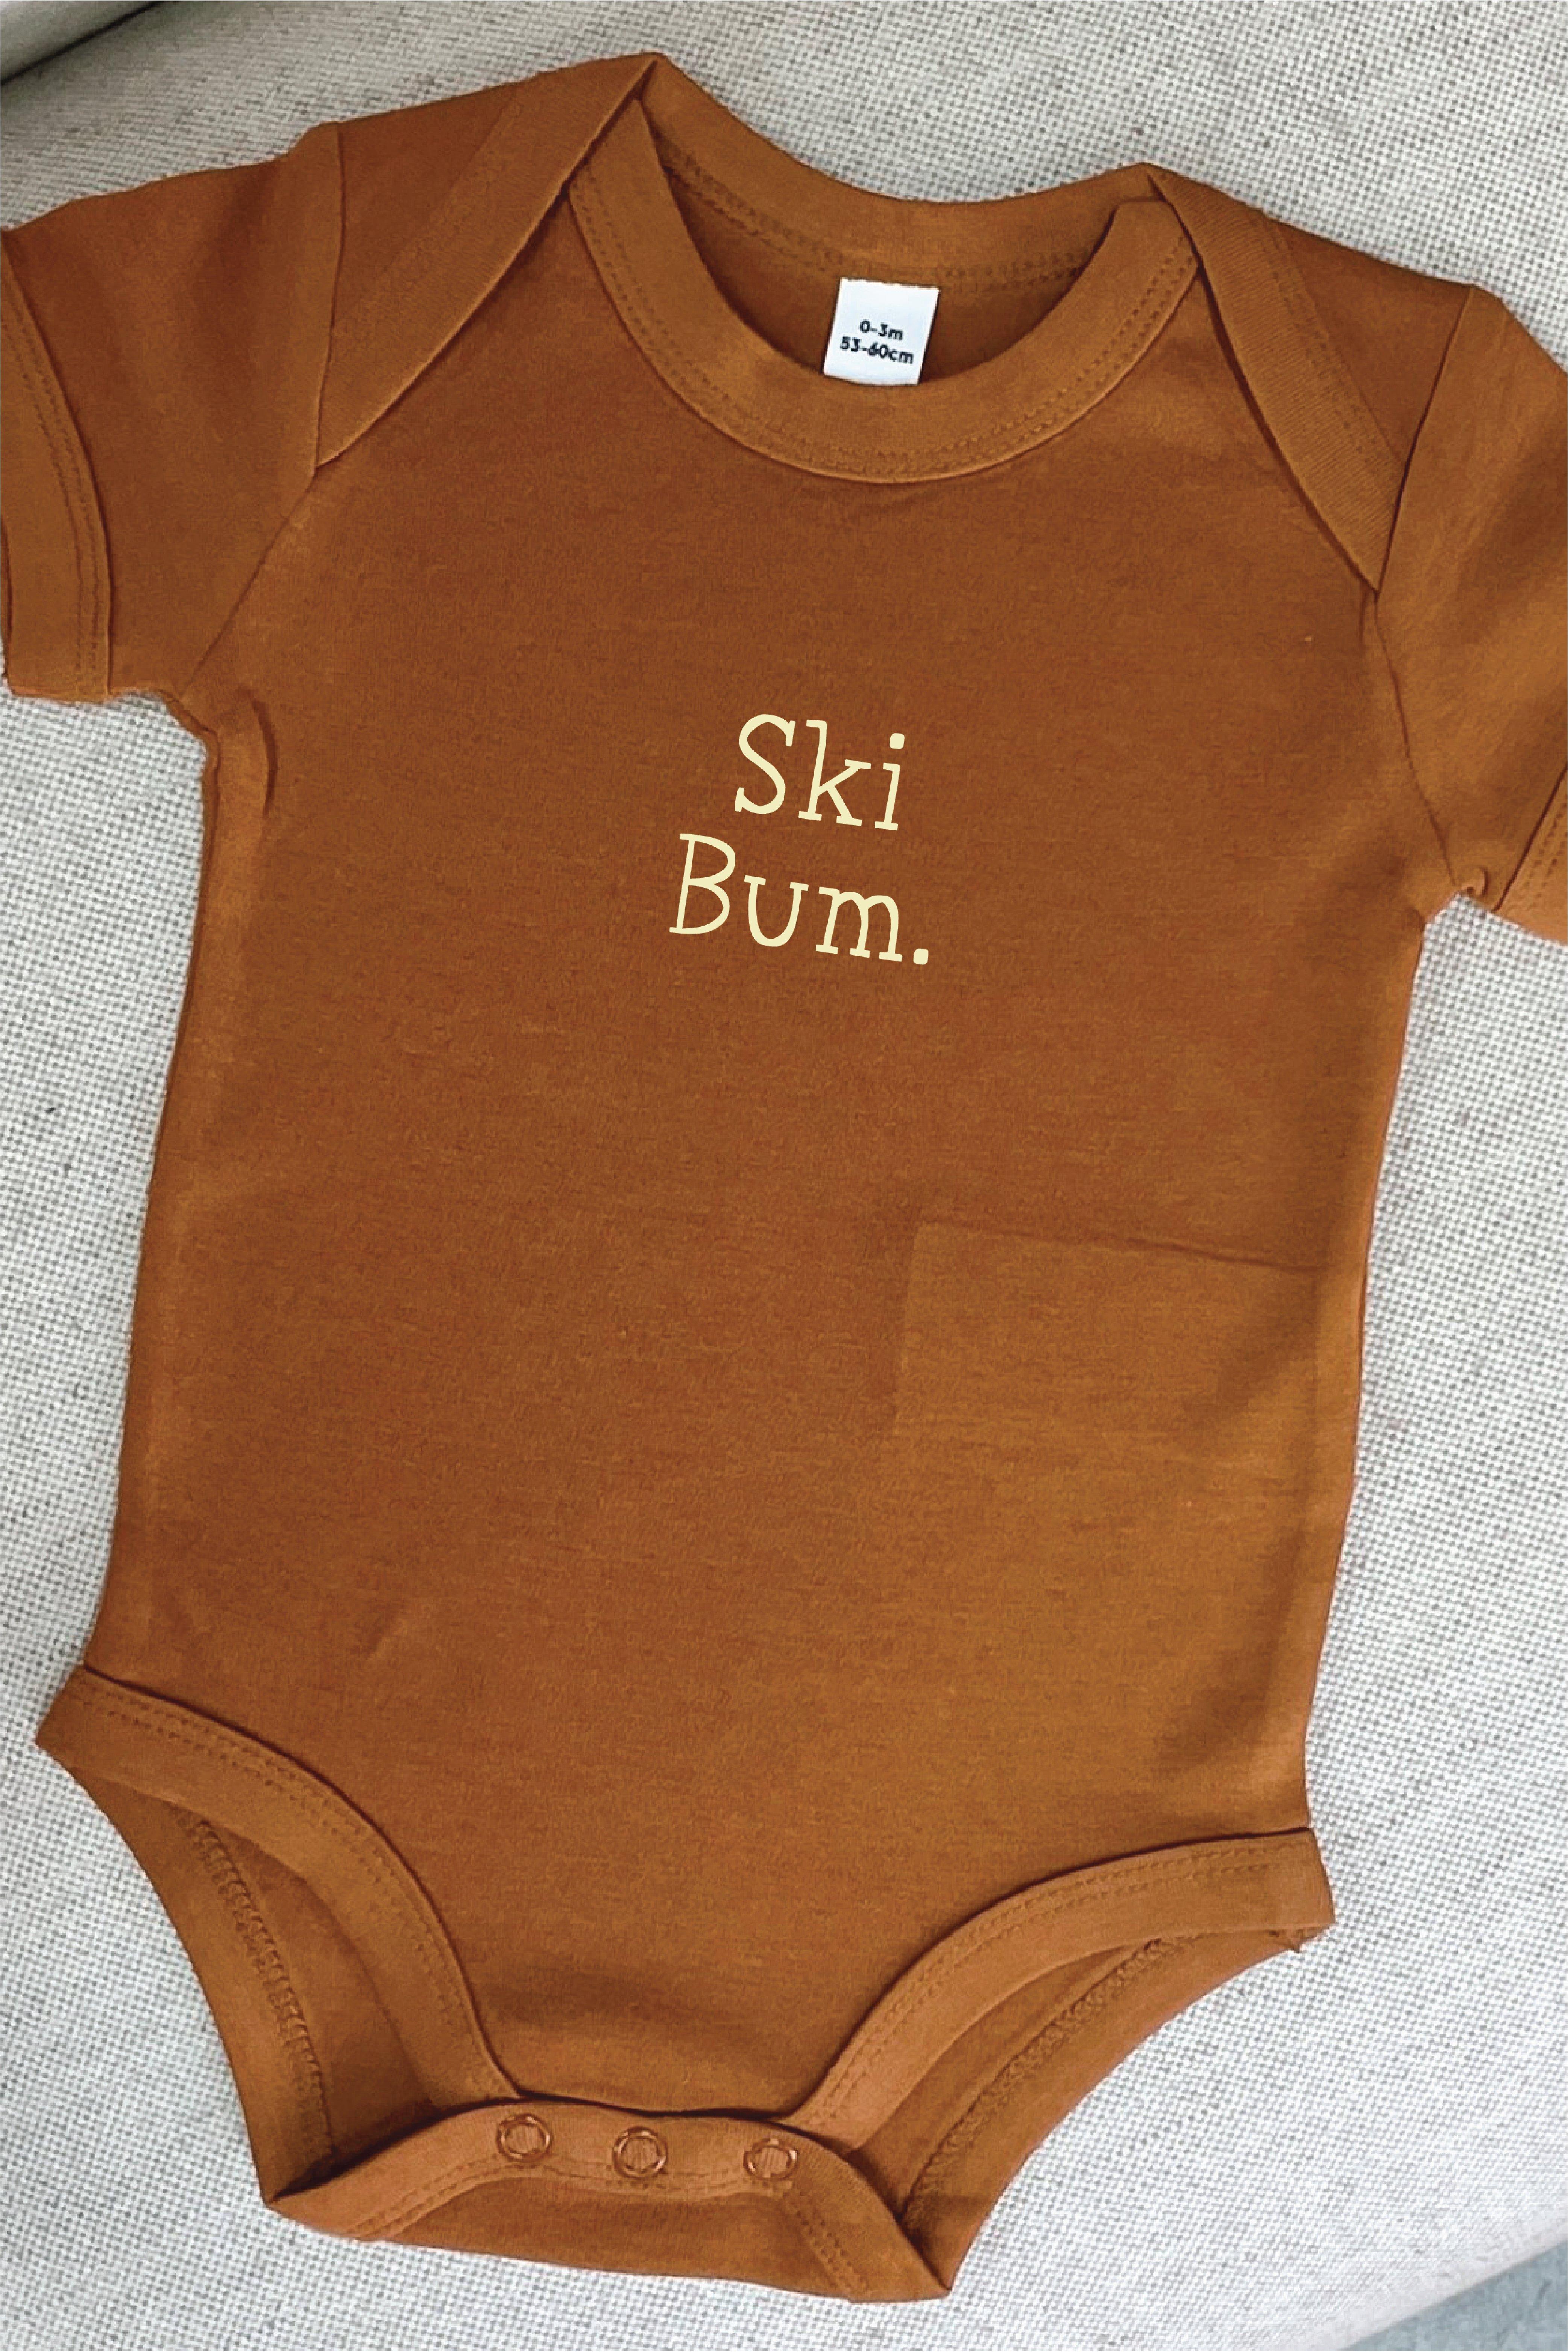 Ski Bum Baby Vest